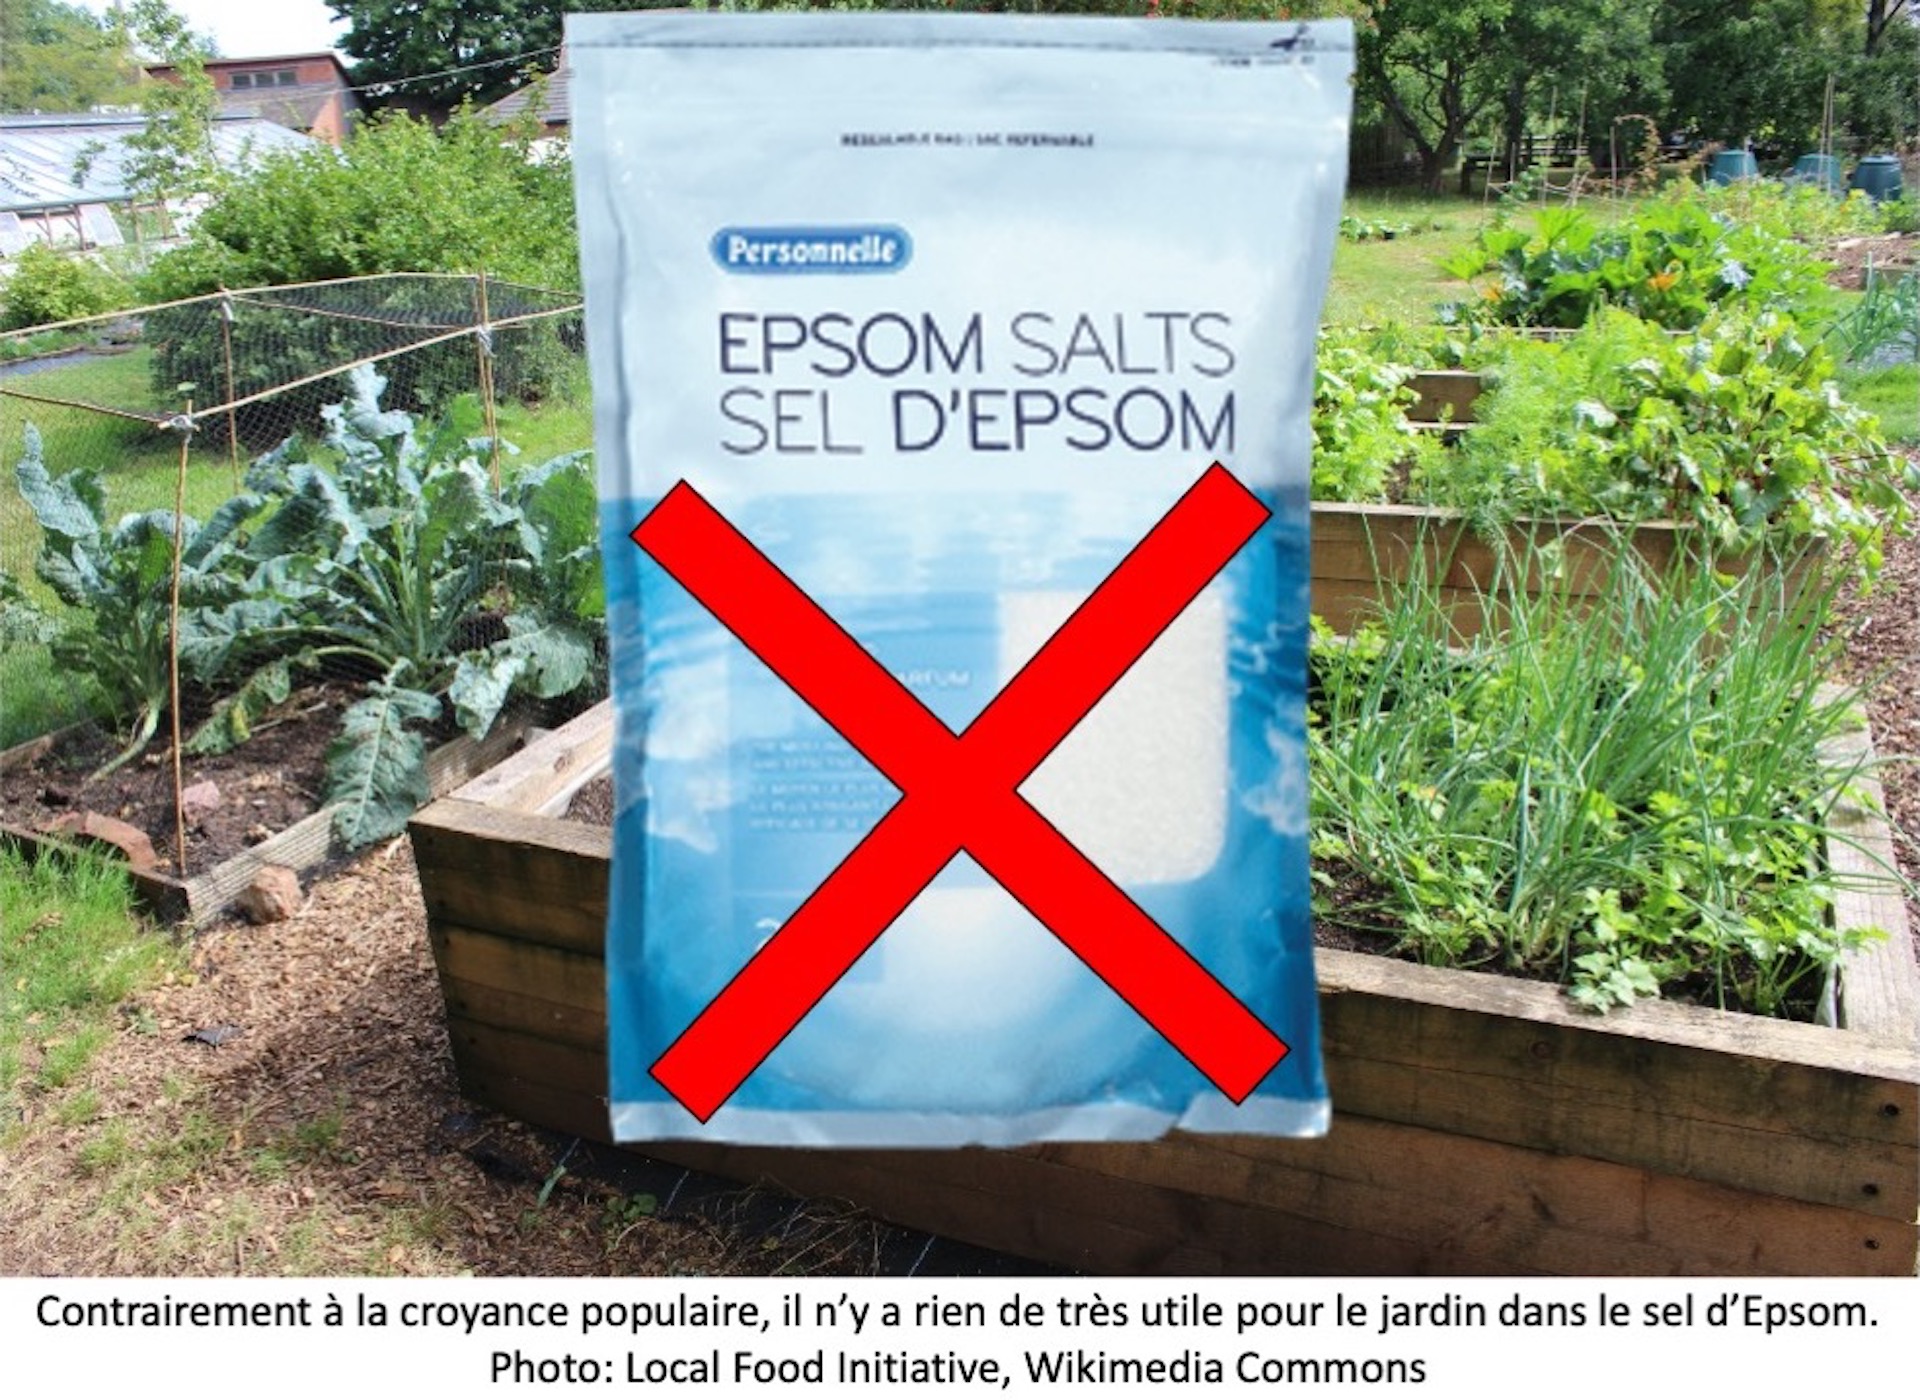 Le sel d’Epsom: essentiellement inutile au jardin